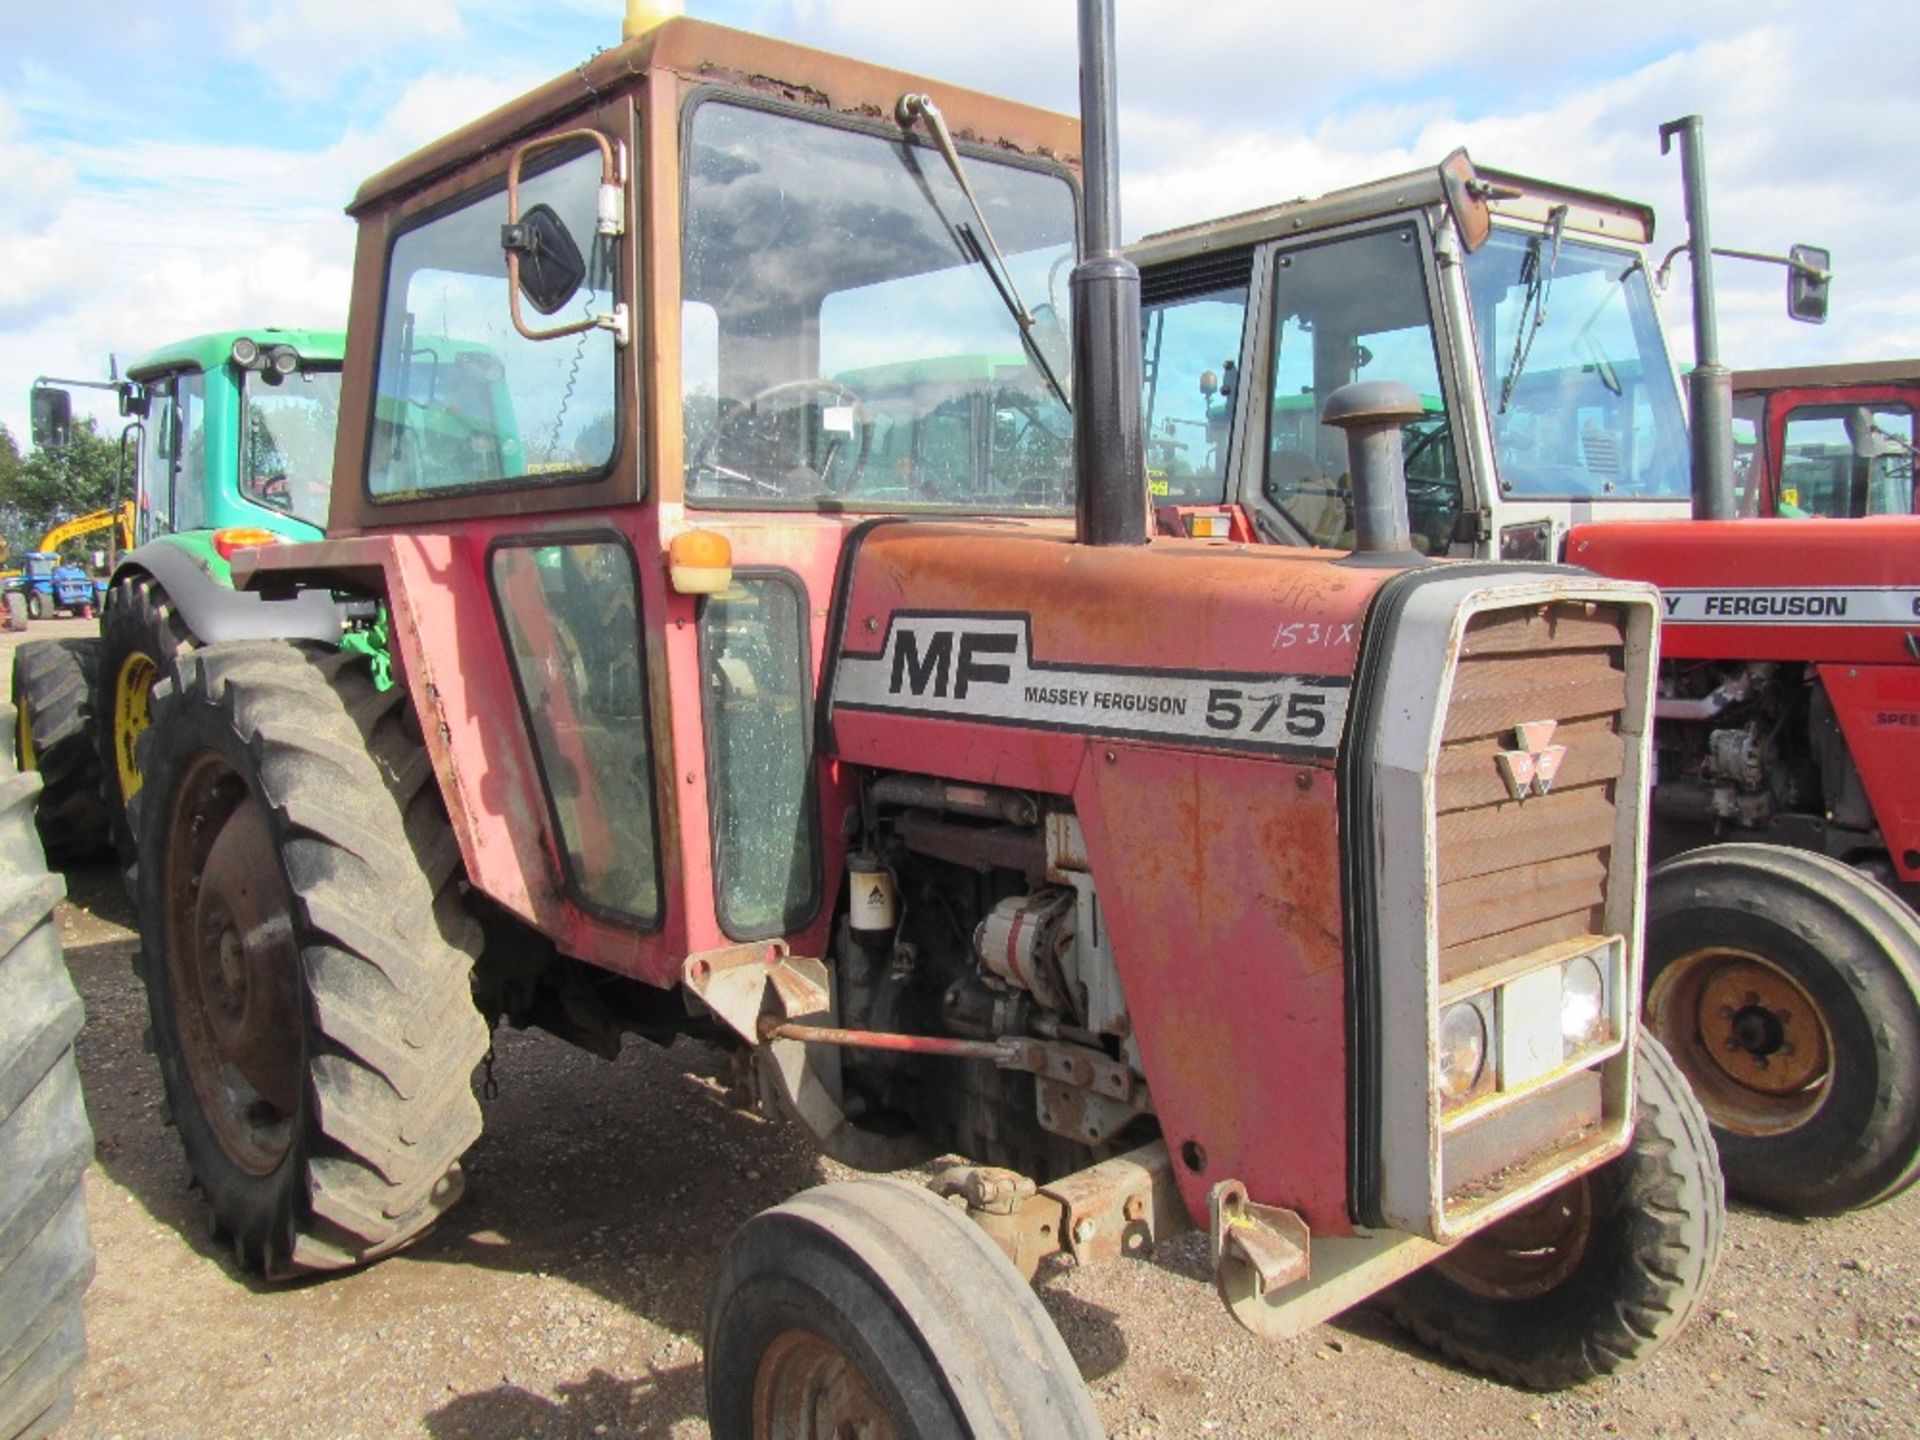 Massey Ferguson 575 2wd Tractor - Image 6 of 6